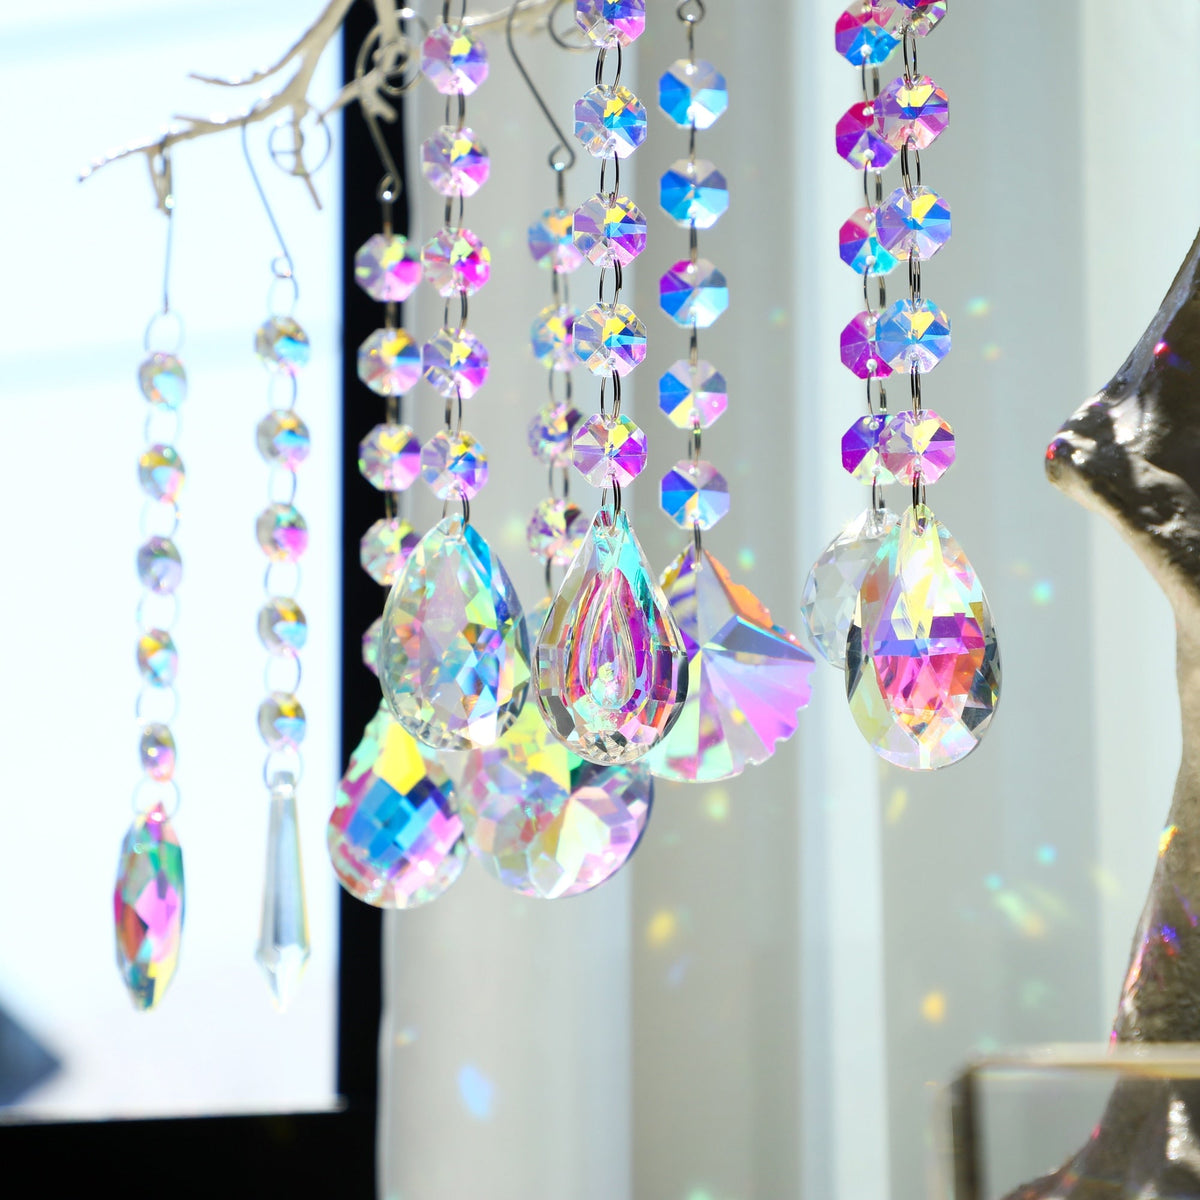 CreativeArrowy 9pcs Crystals Suncatcher, Hanging Suncatchers Beads Chain  Sphere Chandelier Lamps Light Pendant for Christmas Day, Wedding, Plants,  Cars, Window Decor 